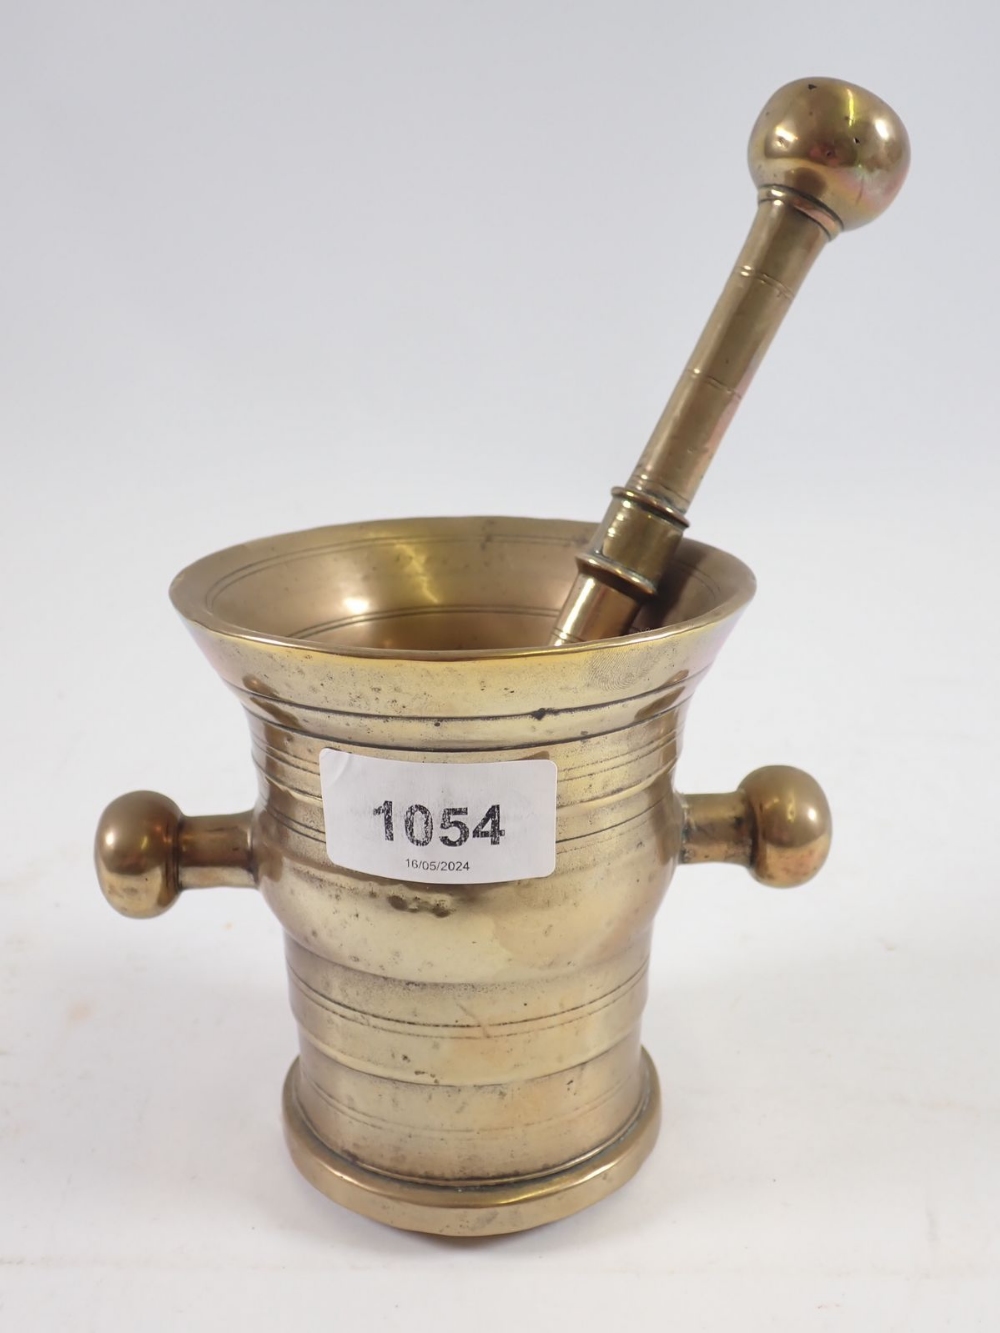 An antique brass pestle and mortar, 11cm tall